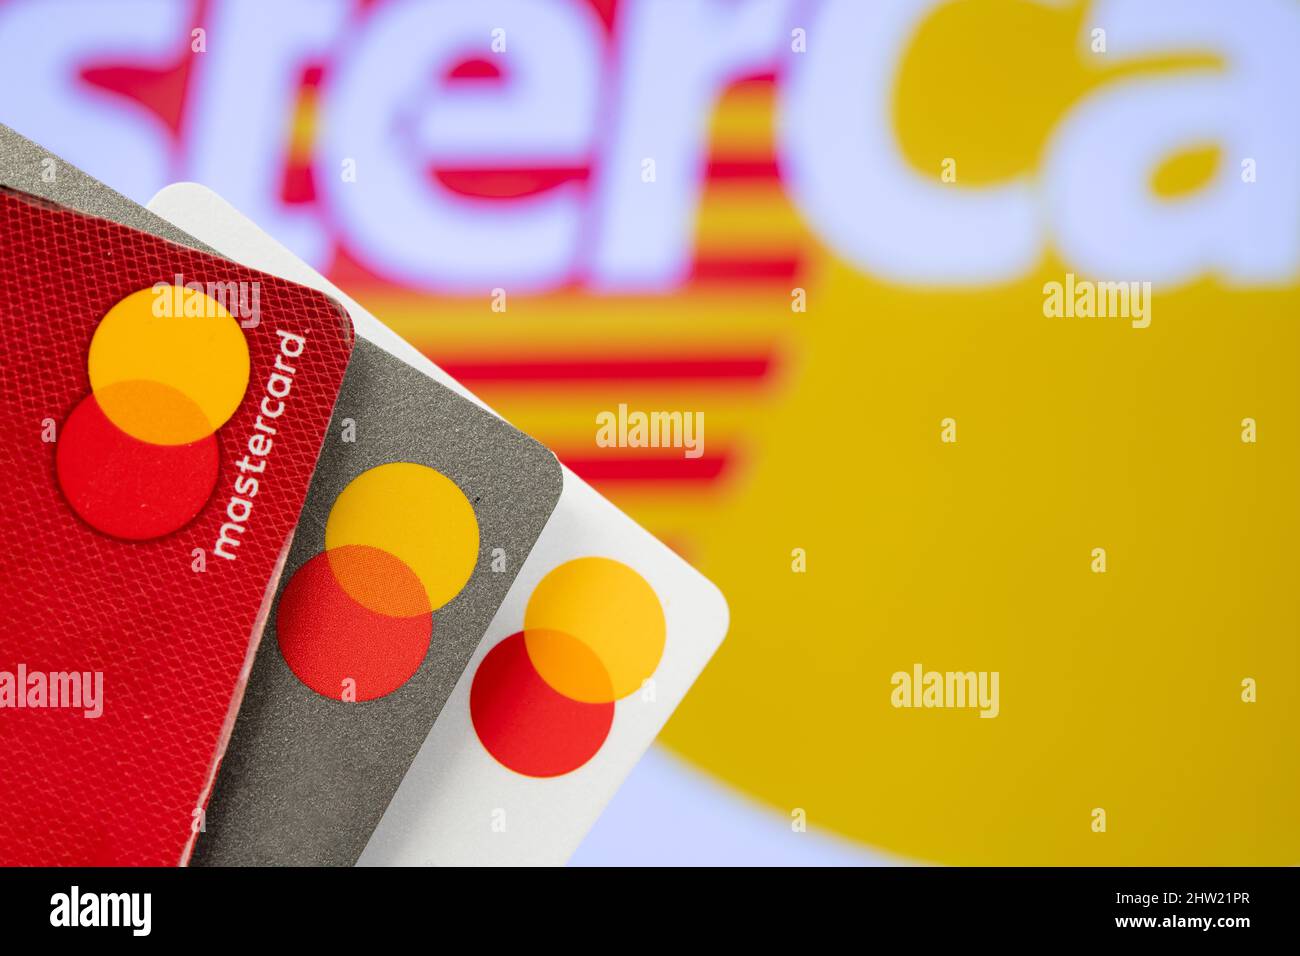 Un grupo de tres tarjetas de crédito Mastercard Foto de stock